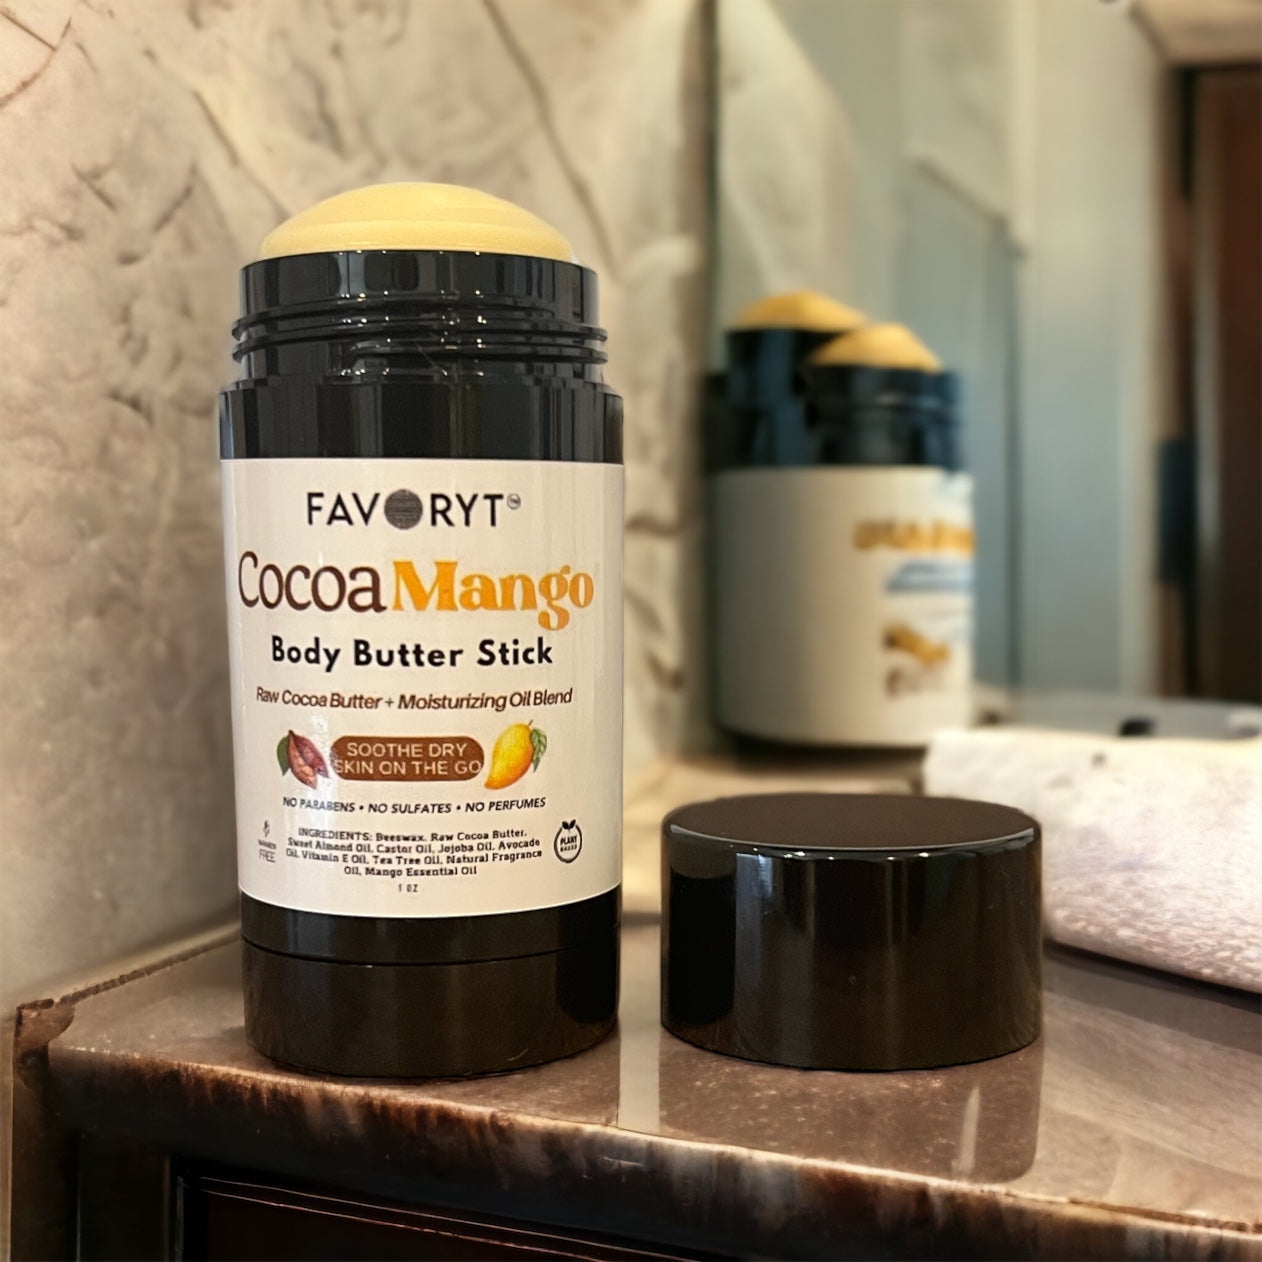 Cocoa Mango Cocoa Butter Skin Balm Stick - FAVORYT BRAND